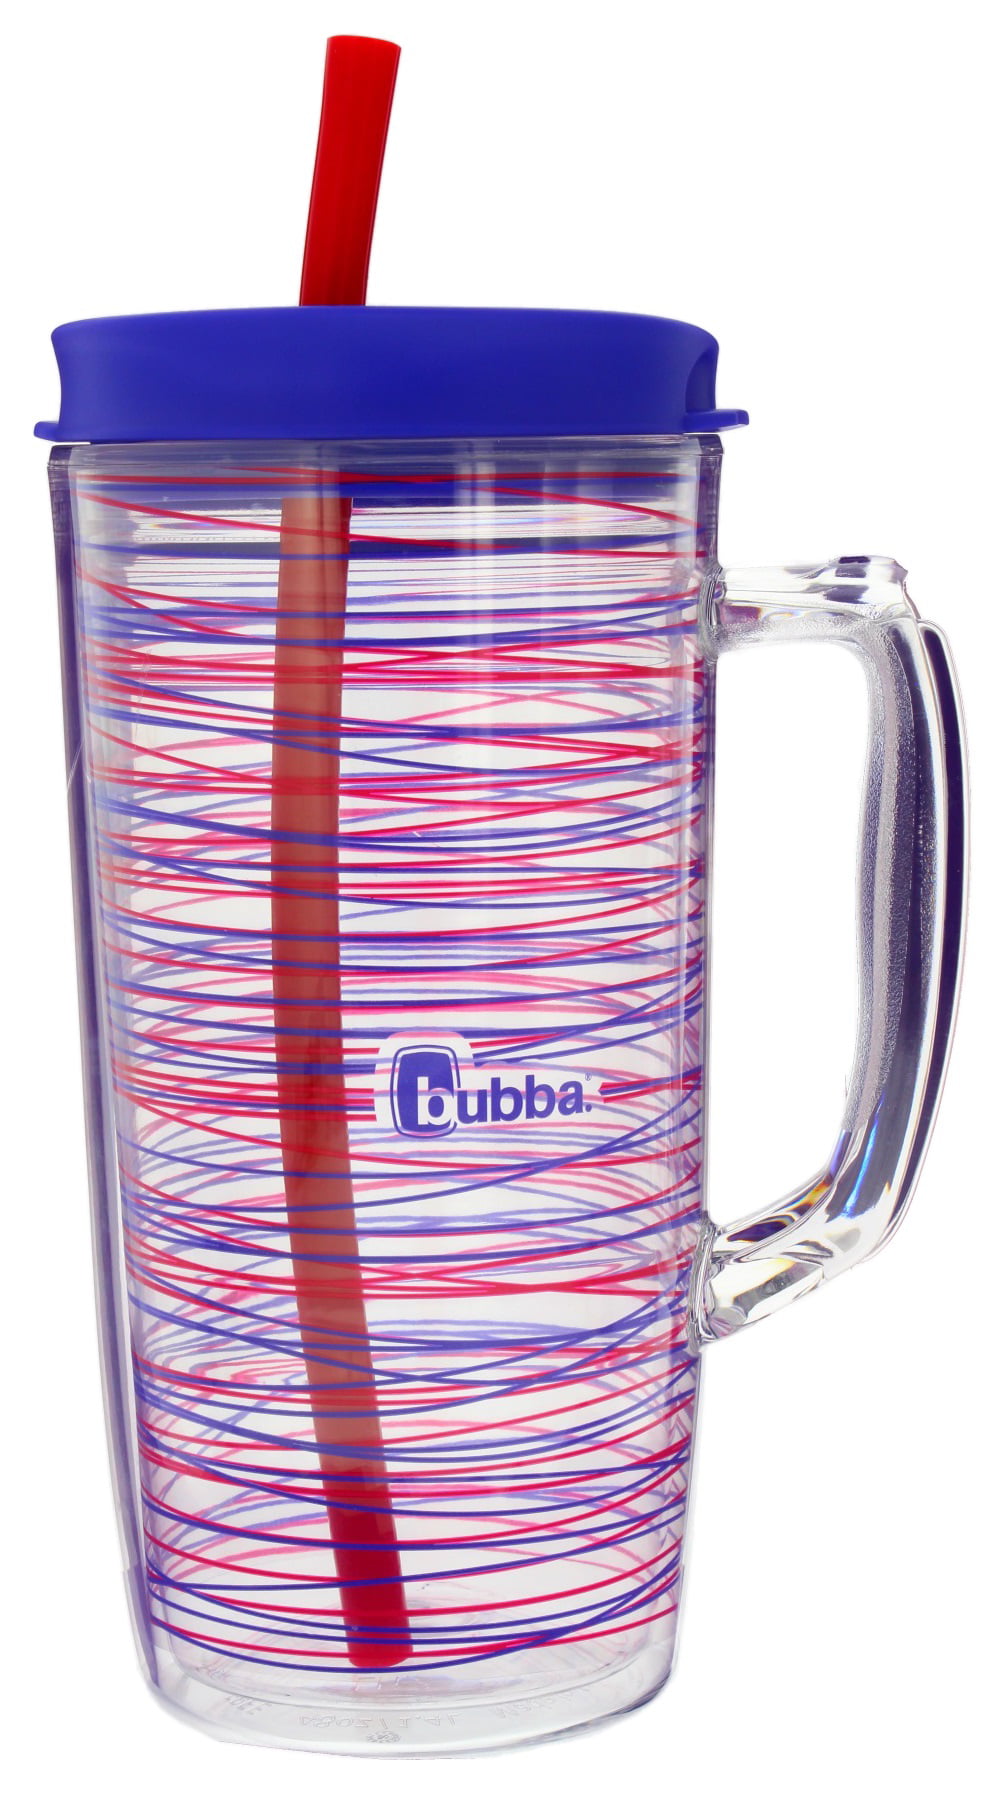 bubba travel mug 48 oz